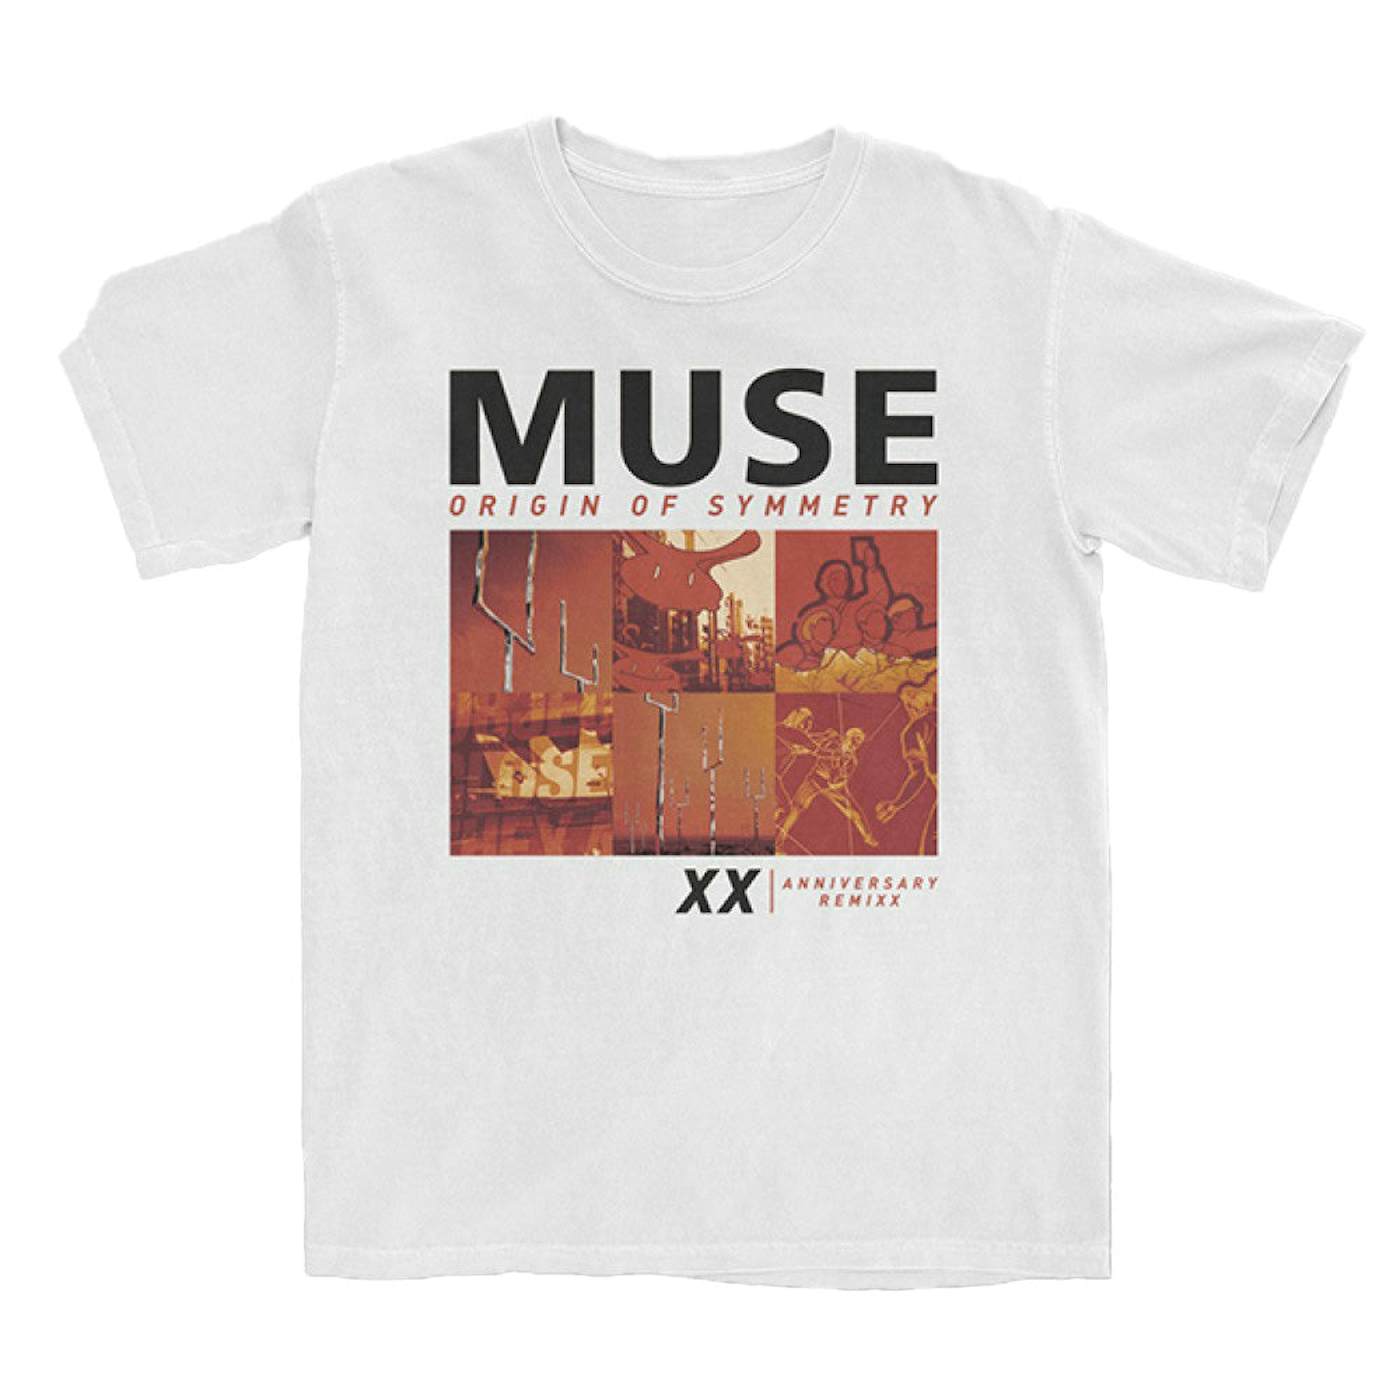 Muse Anniversary Remixx T-Shirt